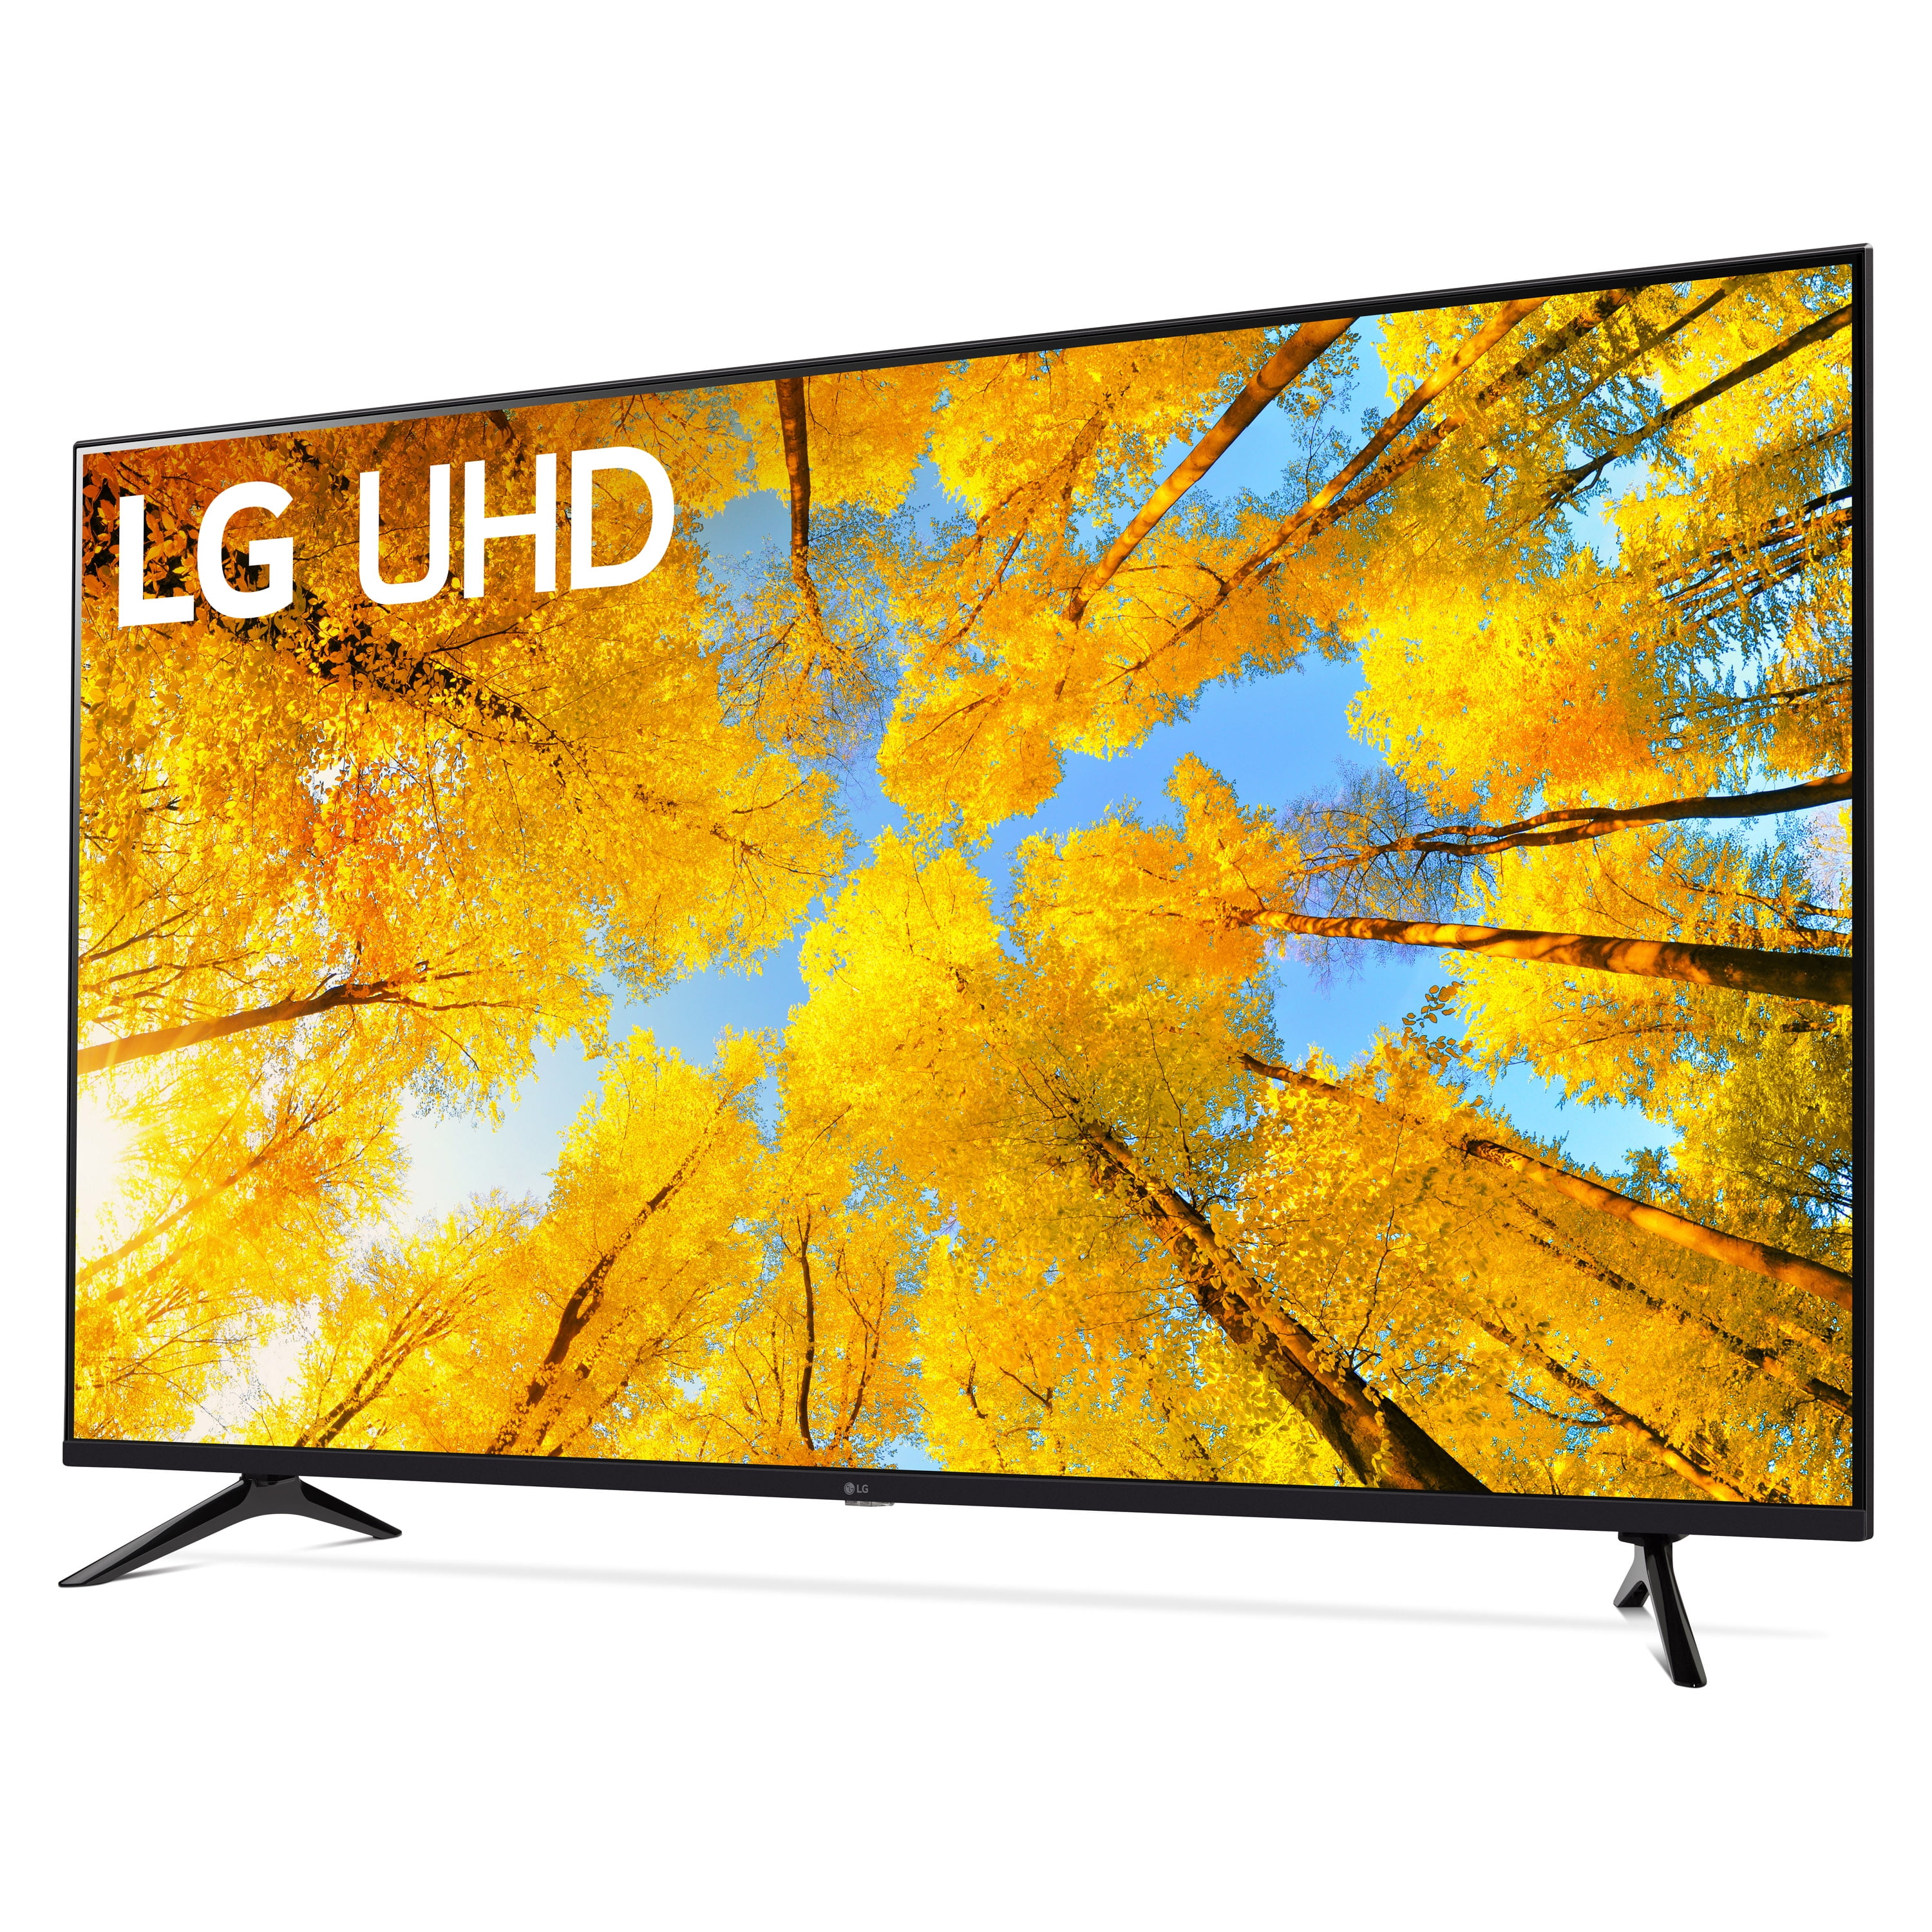 LG 55" Class 4K UHD Smart TV with Active HDR UQ7570 Series 55UQ7570PUJ - Walmart.com